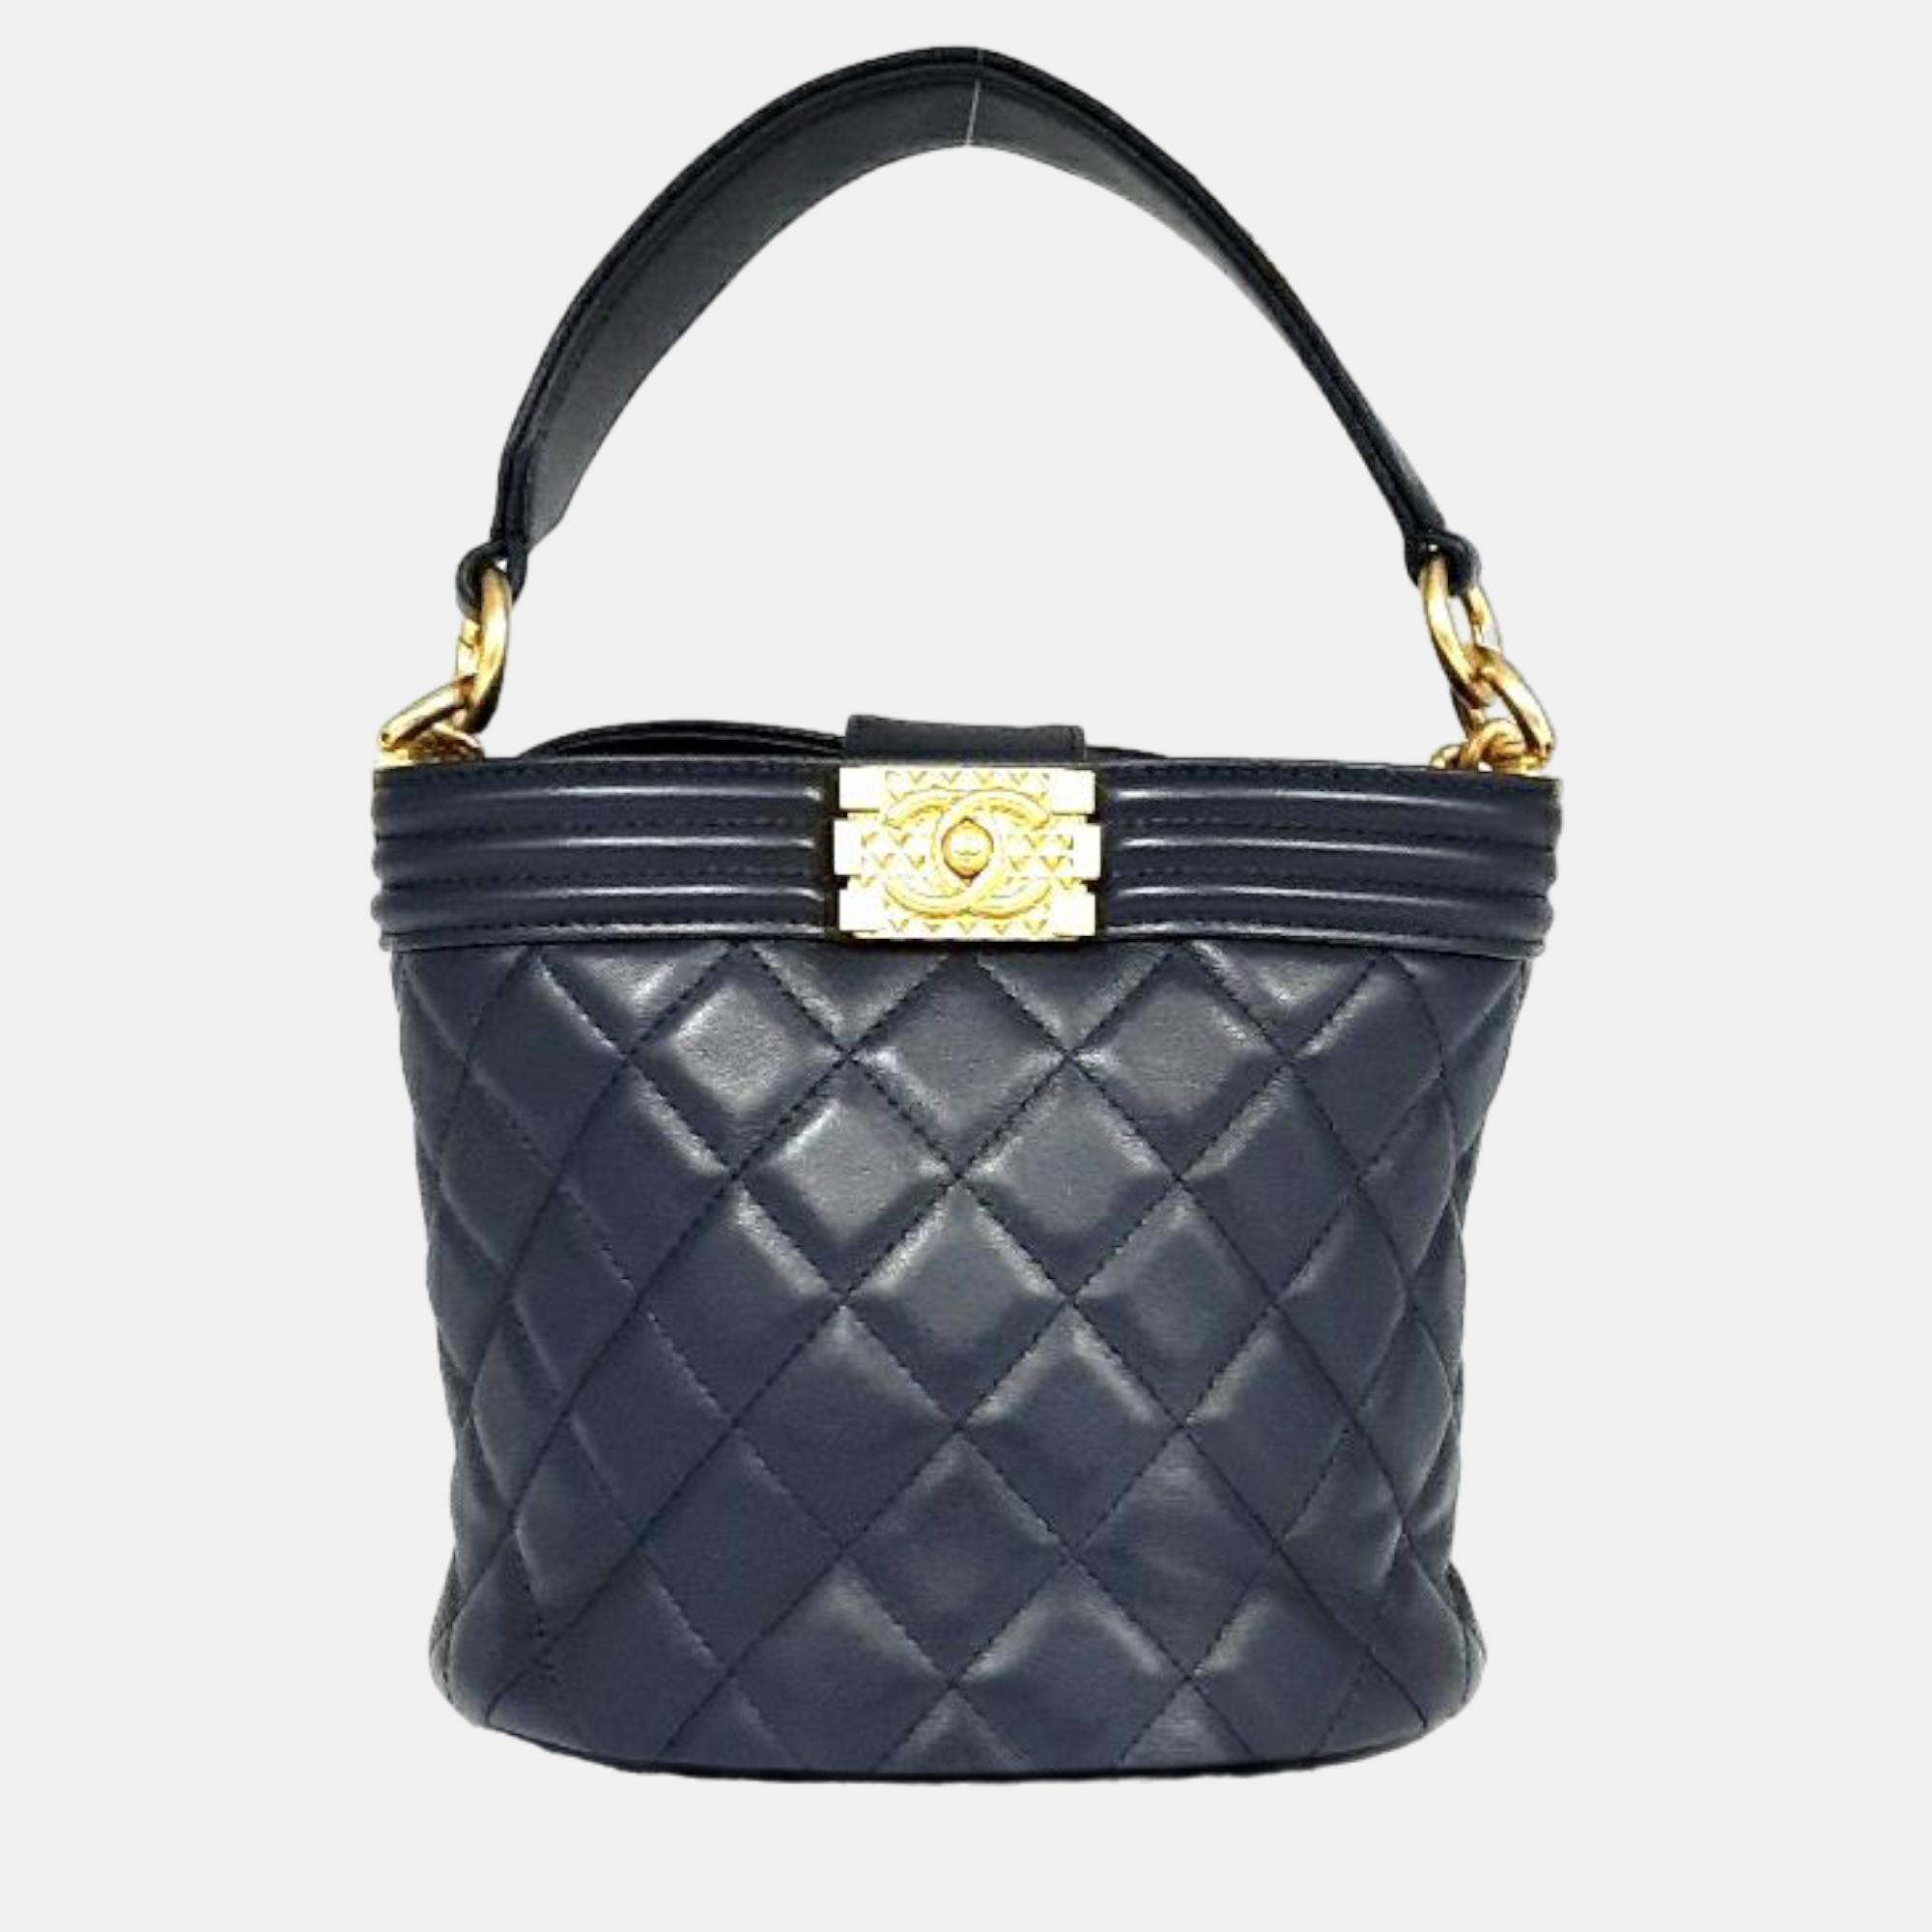 Chanel navy blue leather quilted bucket boy shoulder bag